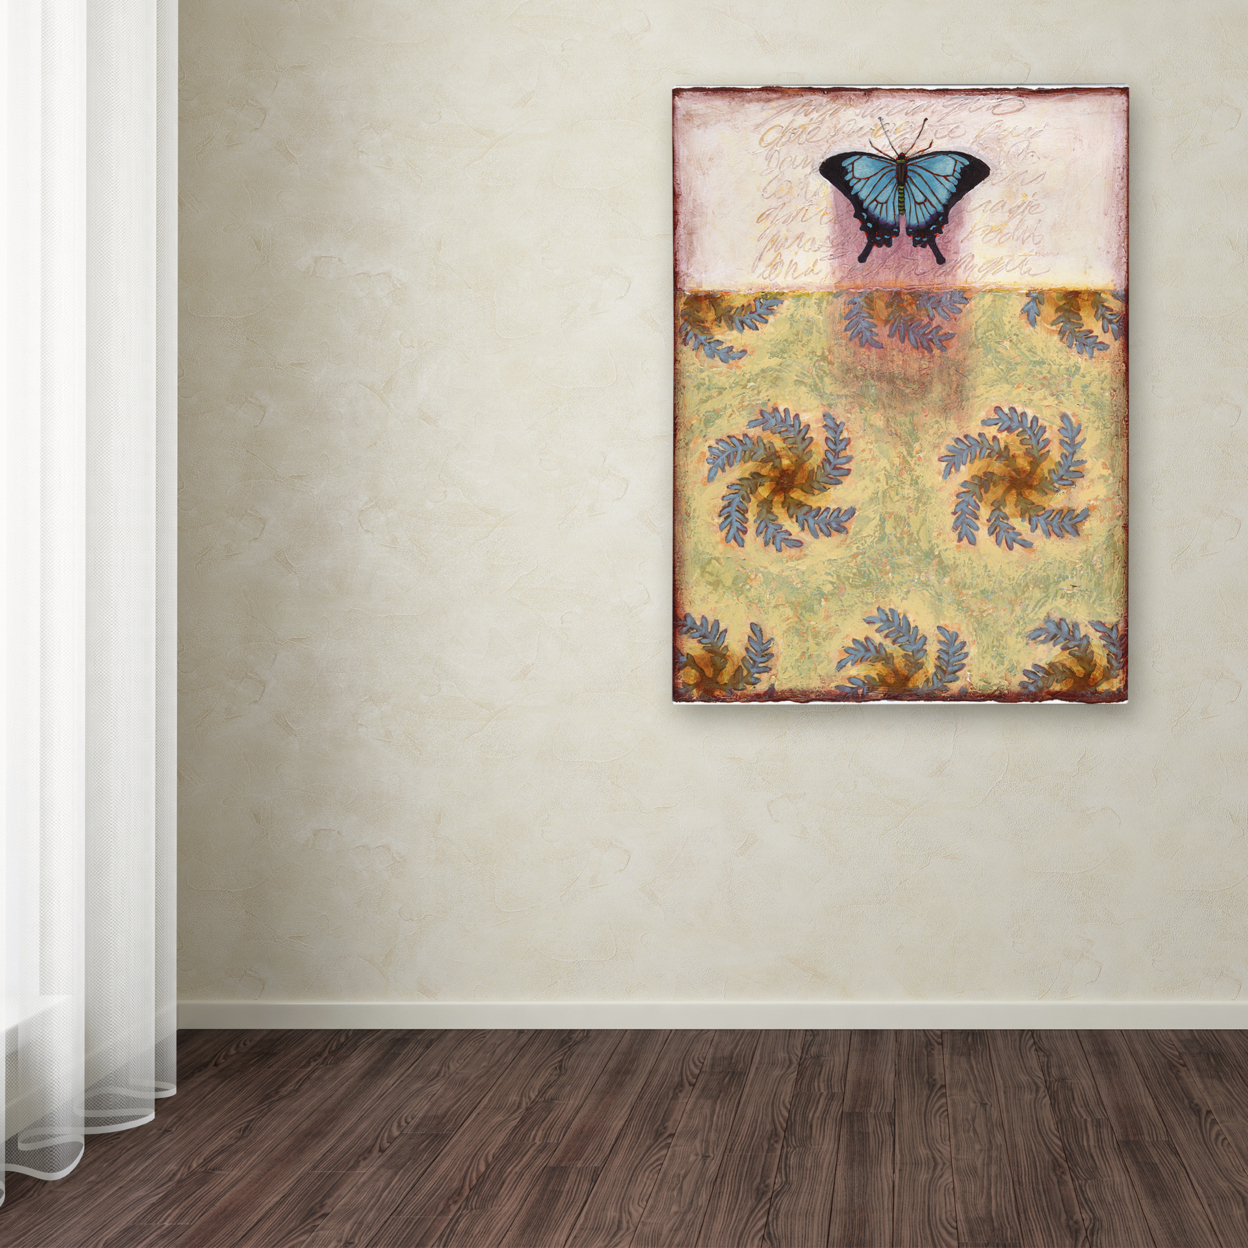 Rachel Paxton 'Tashmoo Butterfly' Canvas Wall Art 35 X 47 Inches